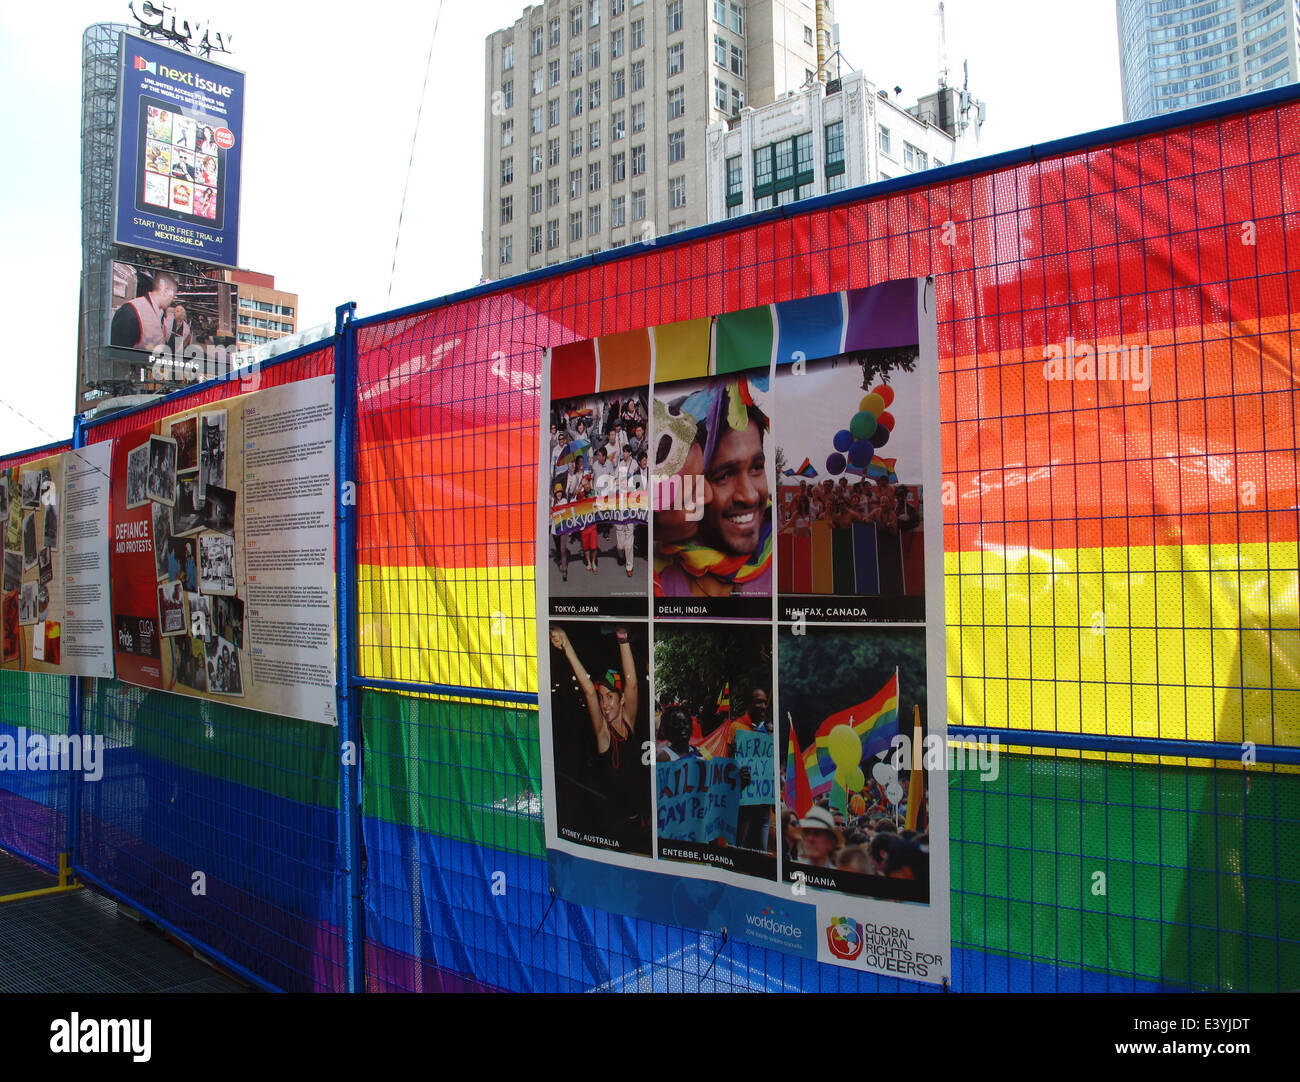 La Semaine de la World Pride 2014 à Toronto, Ontario. Banque D'Images